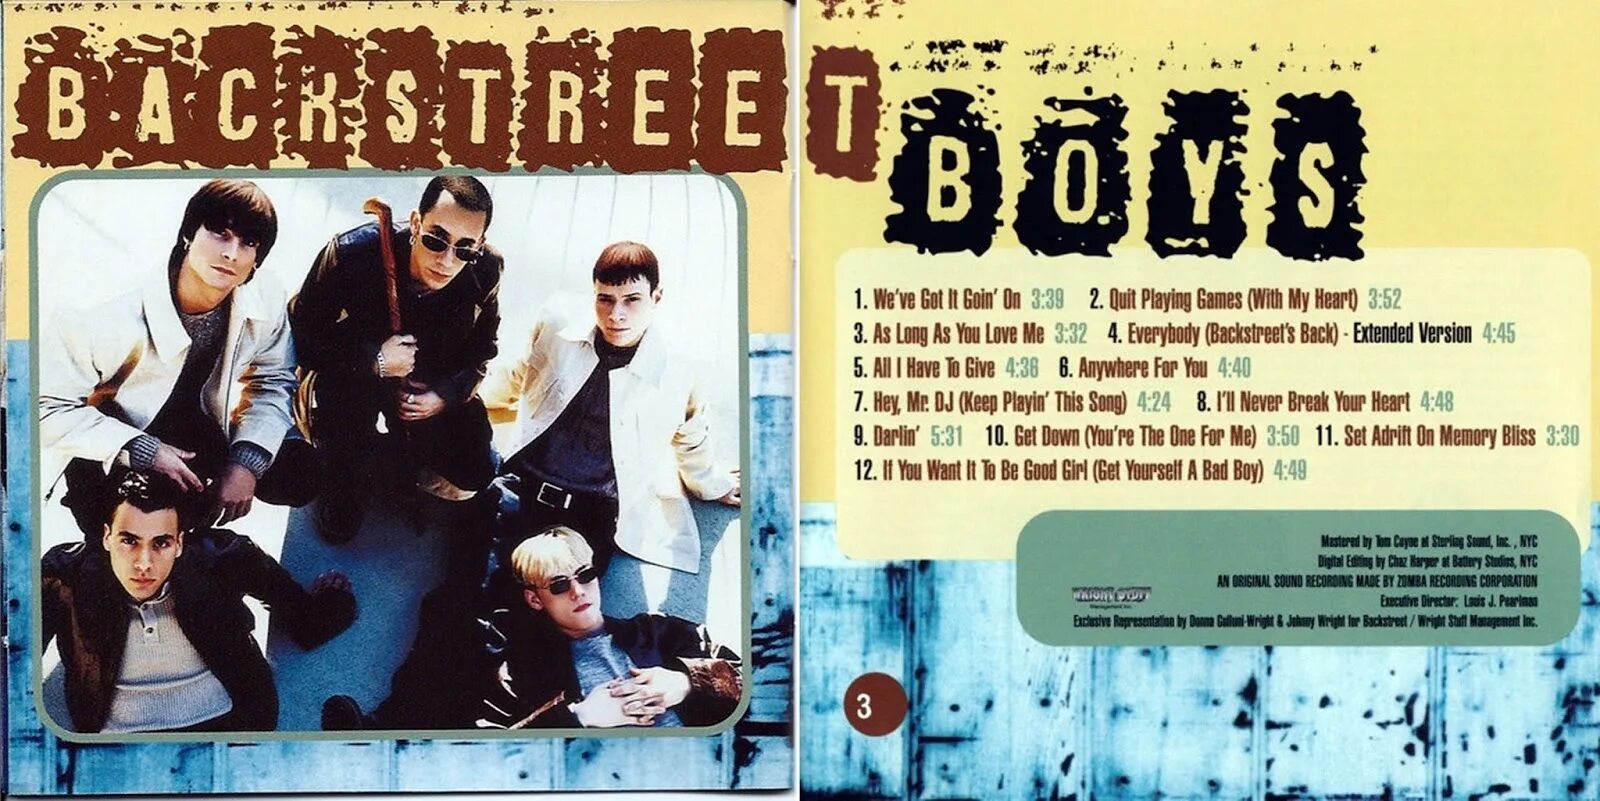 Backstreet boys 1997. Backstreet boys - 1997 - Backstreet's back. Бэкстрит бойс 1996. Альбом Backstreet boys 1997. Backstreet s back